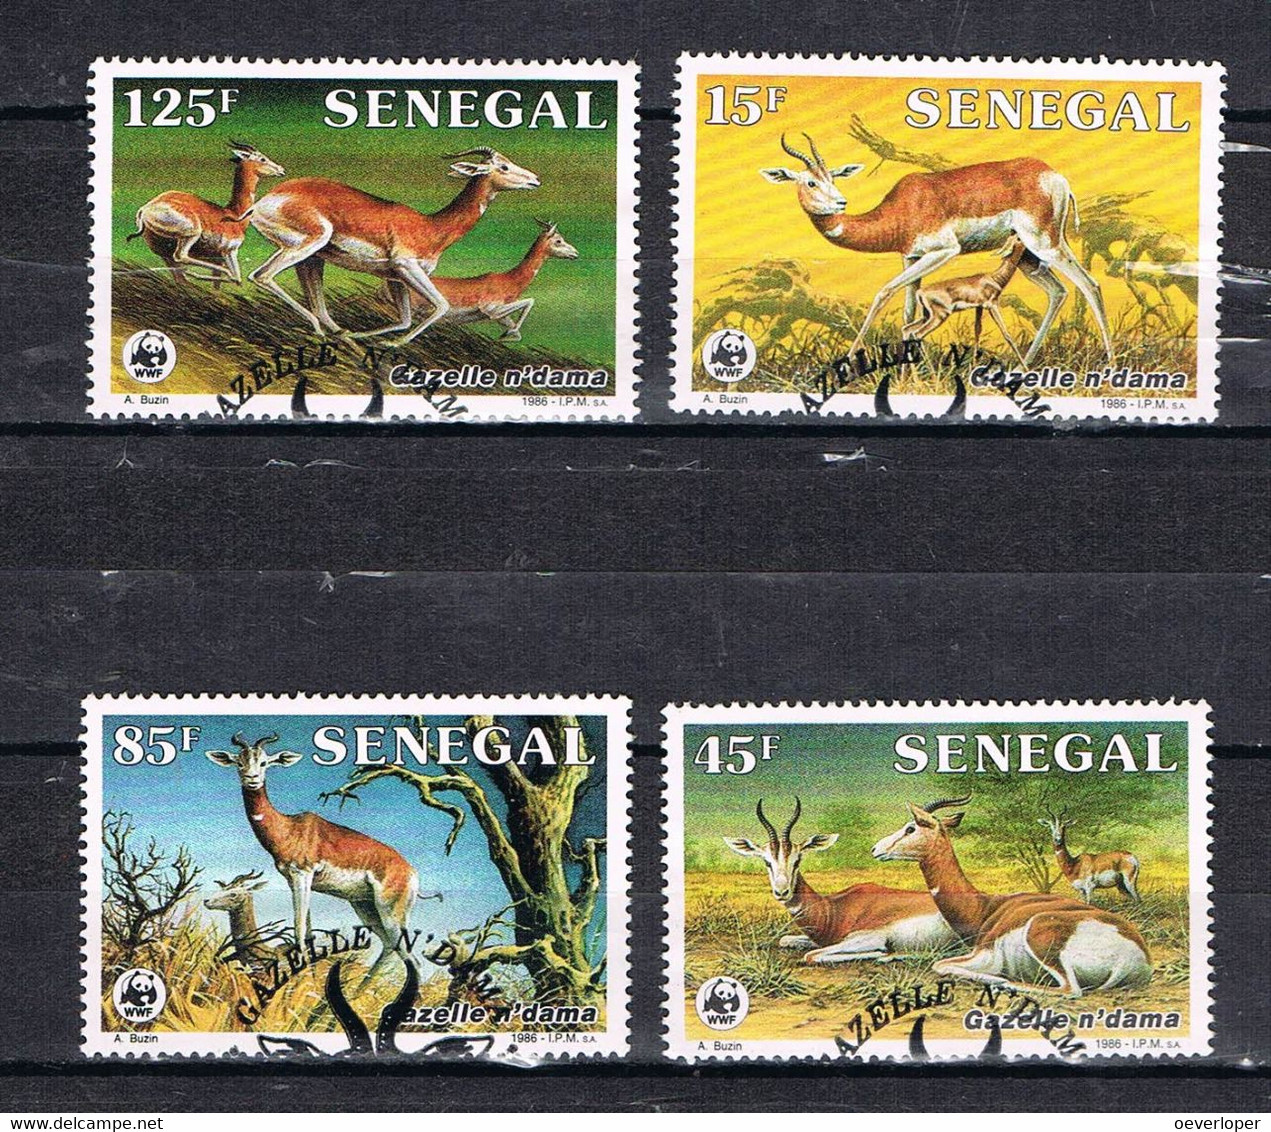 Senegal 1986 Antelope WWF Used - Used Stamps